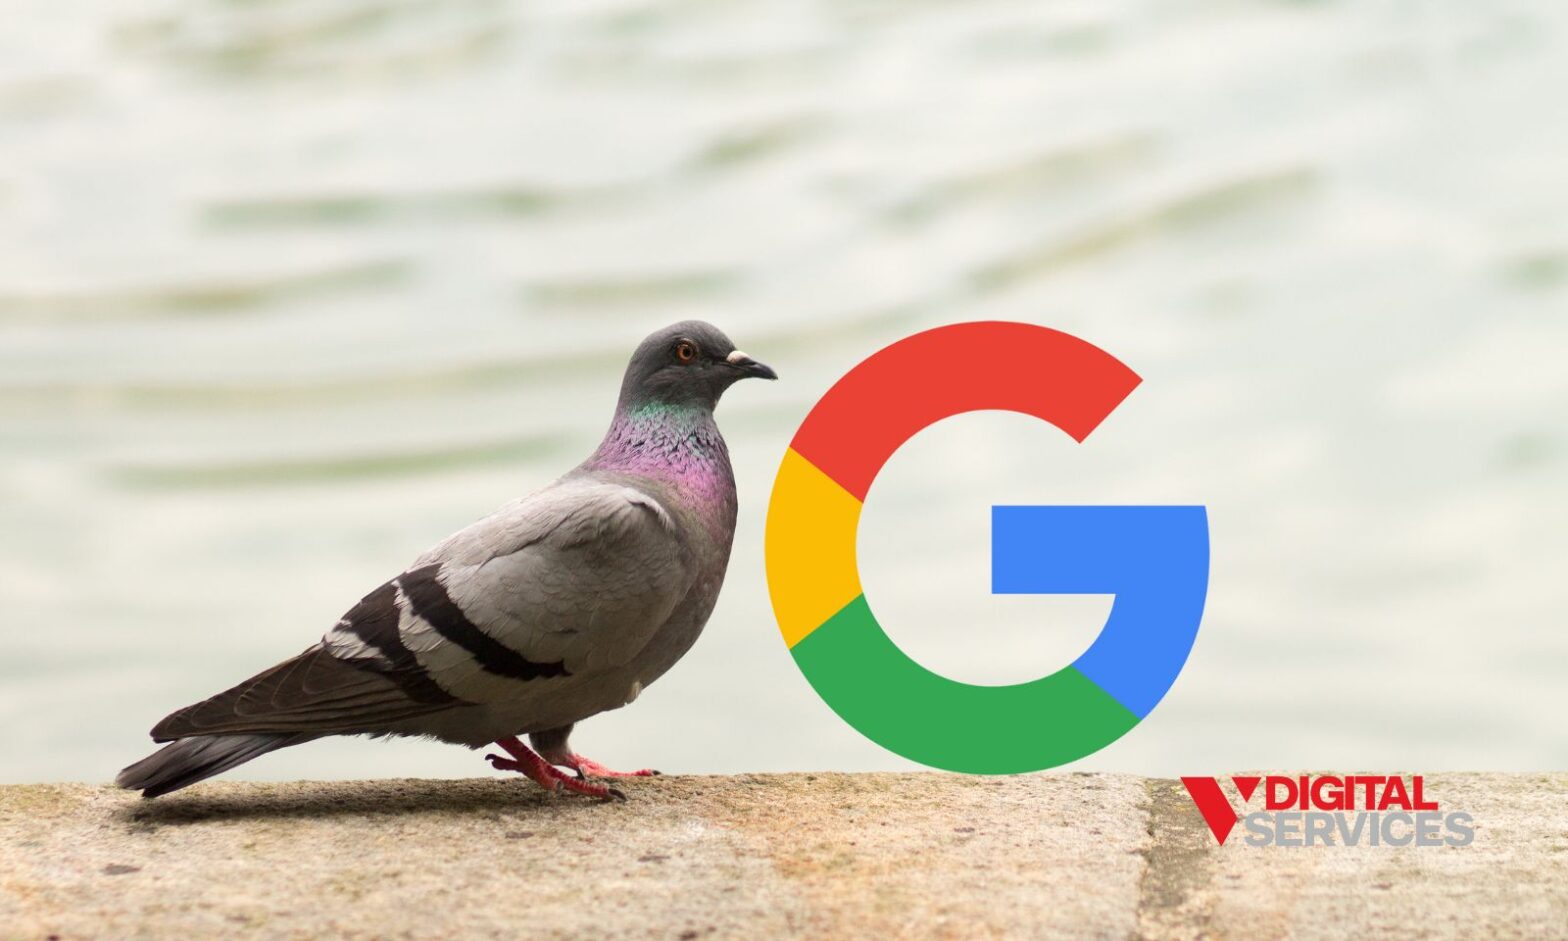 Google Pidgeon SEO V Digital Services